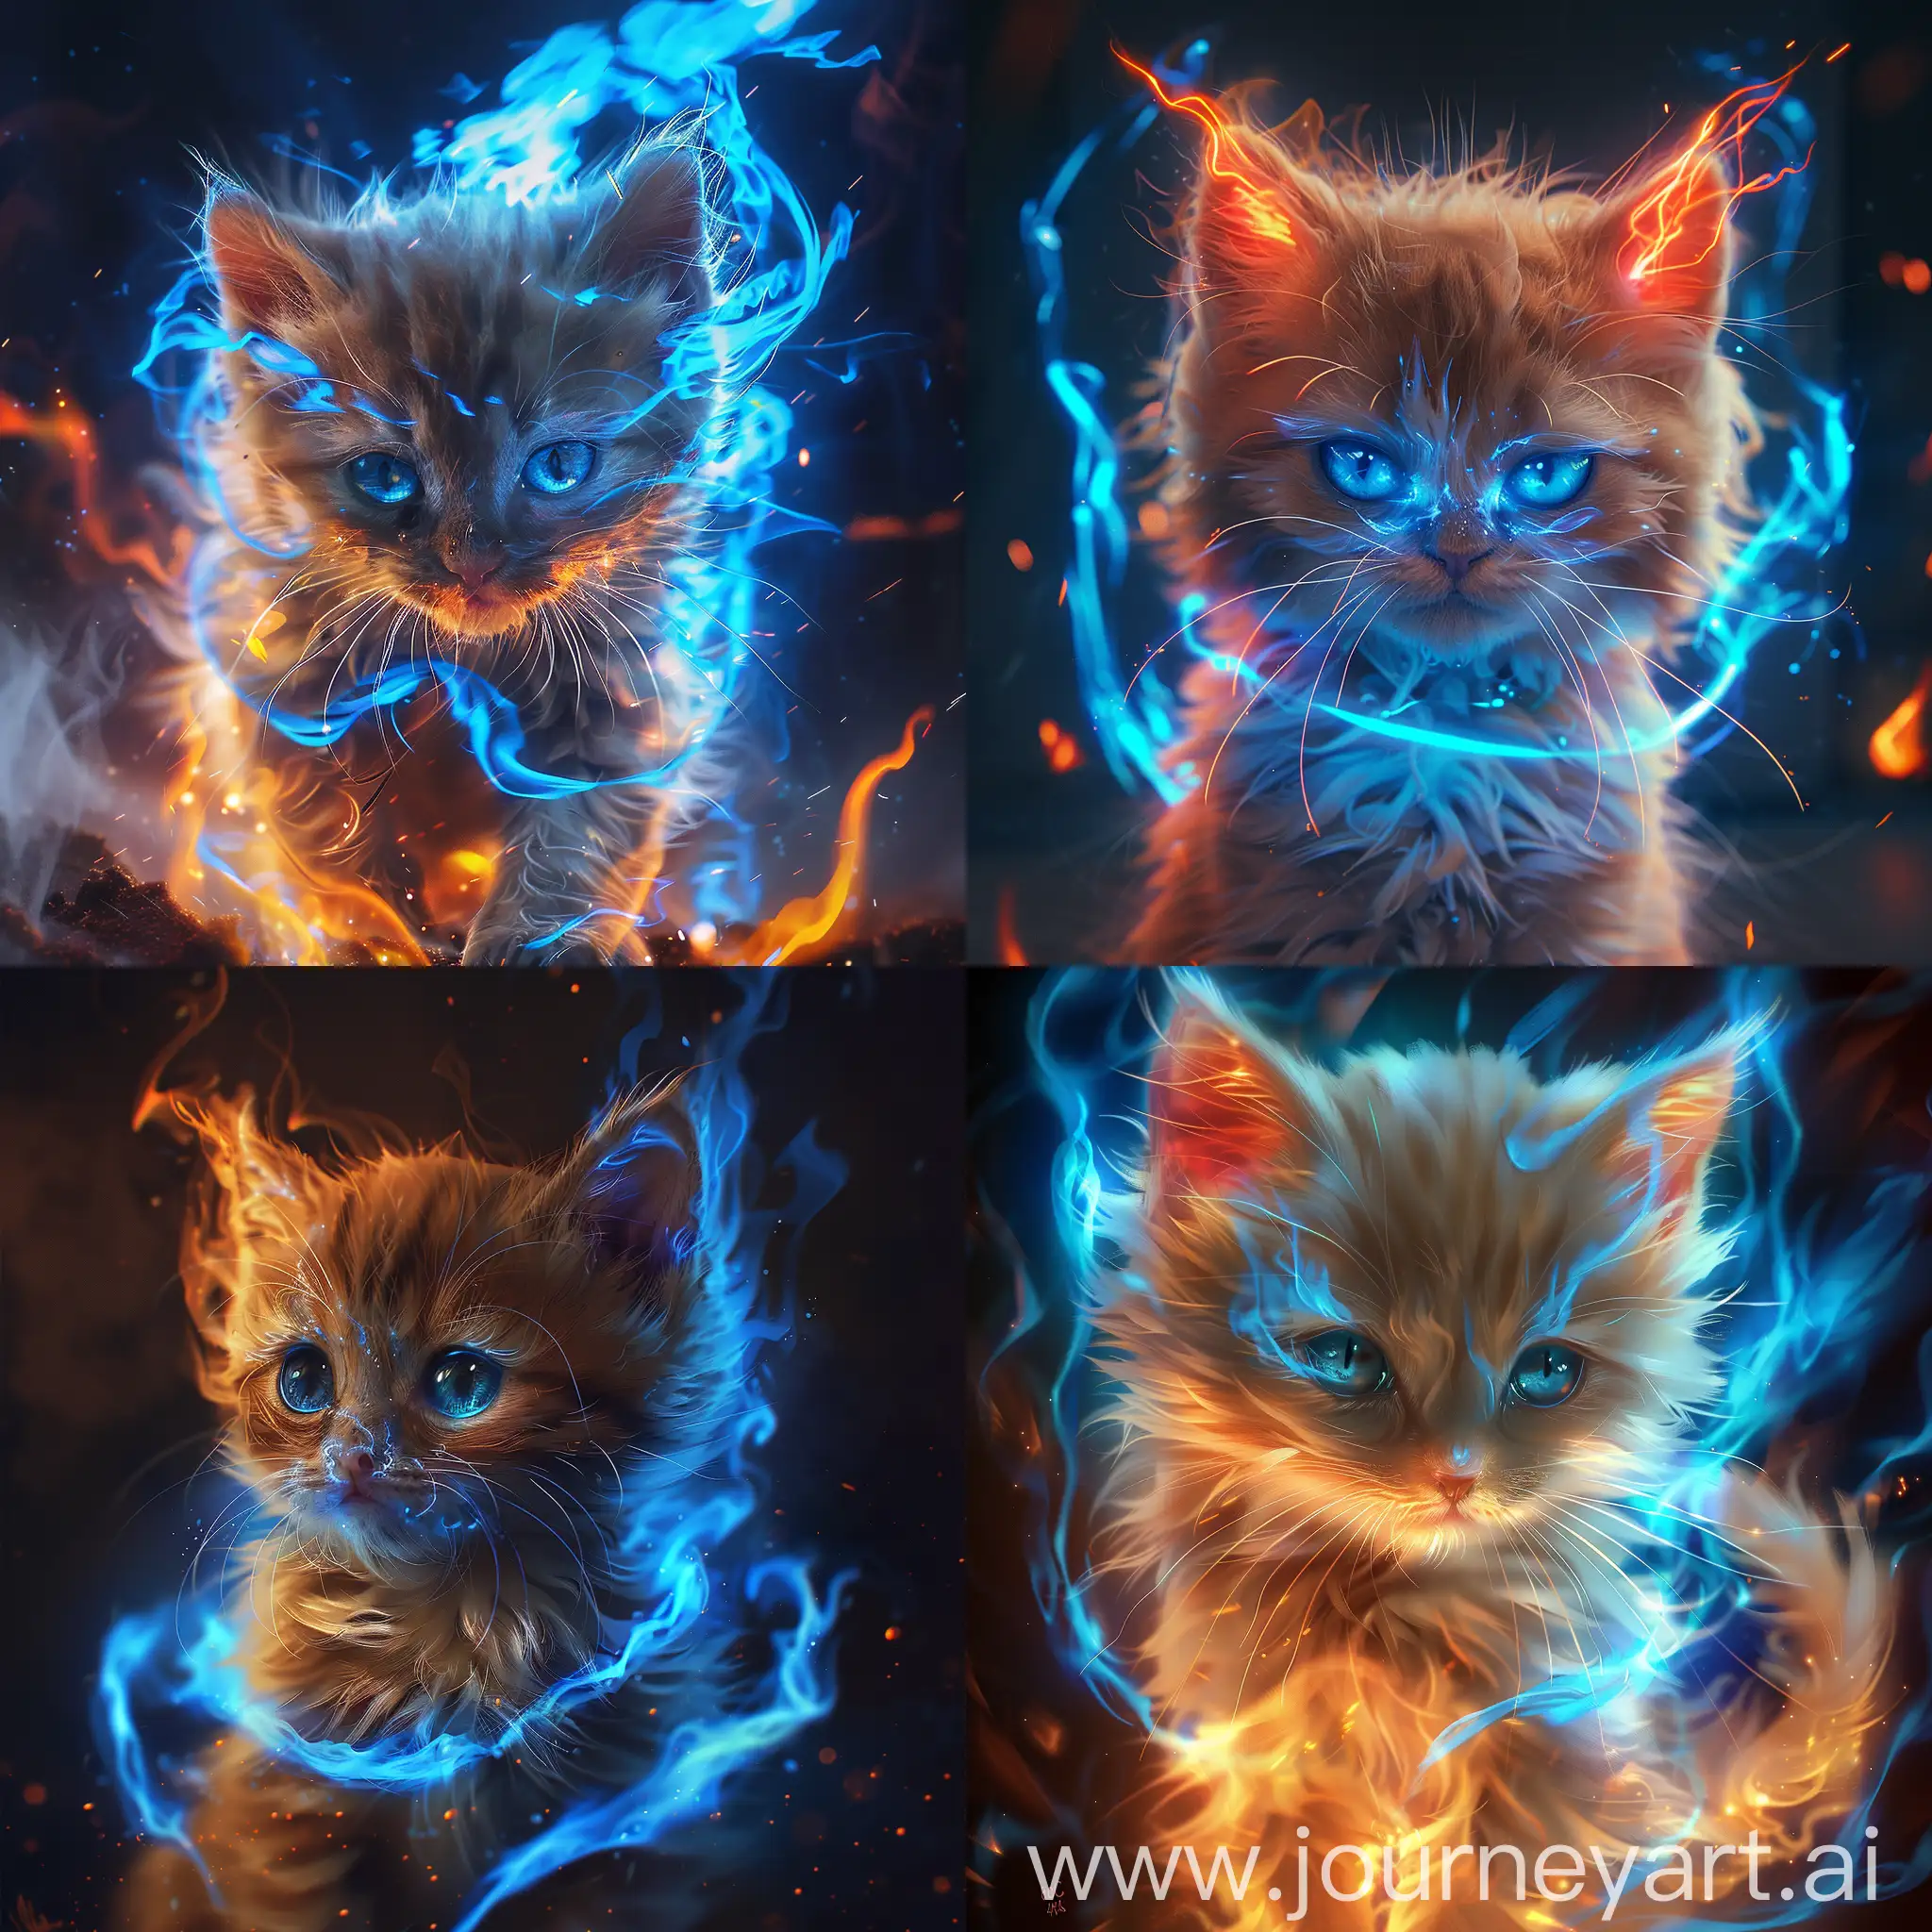 HyperRealistic-Anime-Fire-Kitten-with-Glowing-Eyes-in-Ultra-Detailed-Portrait